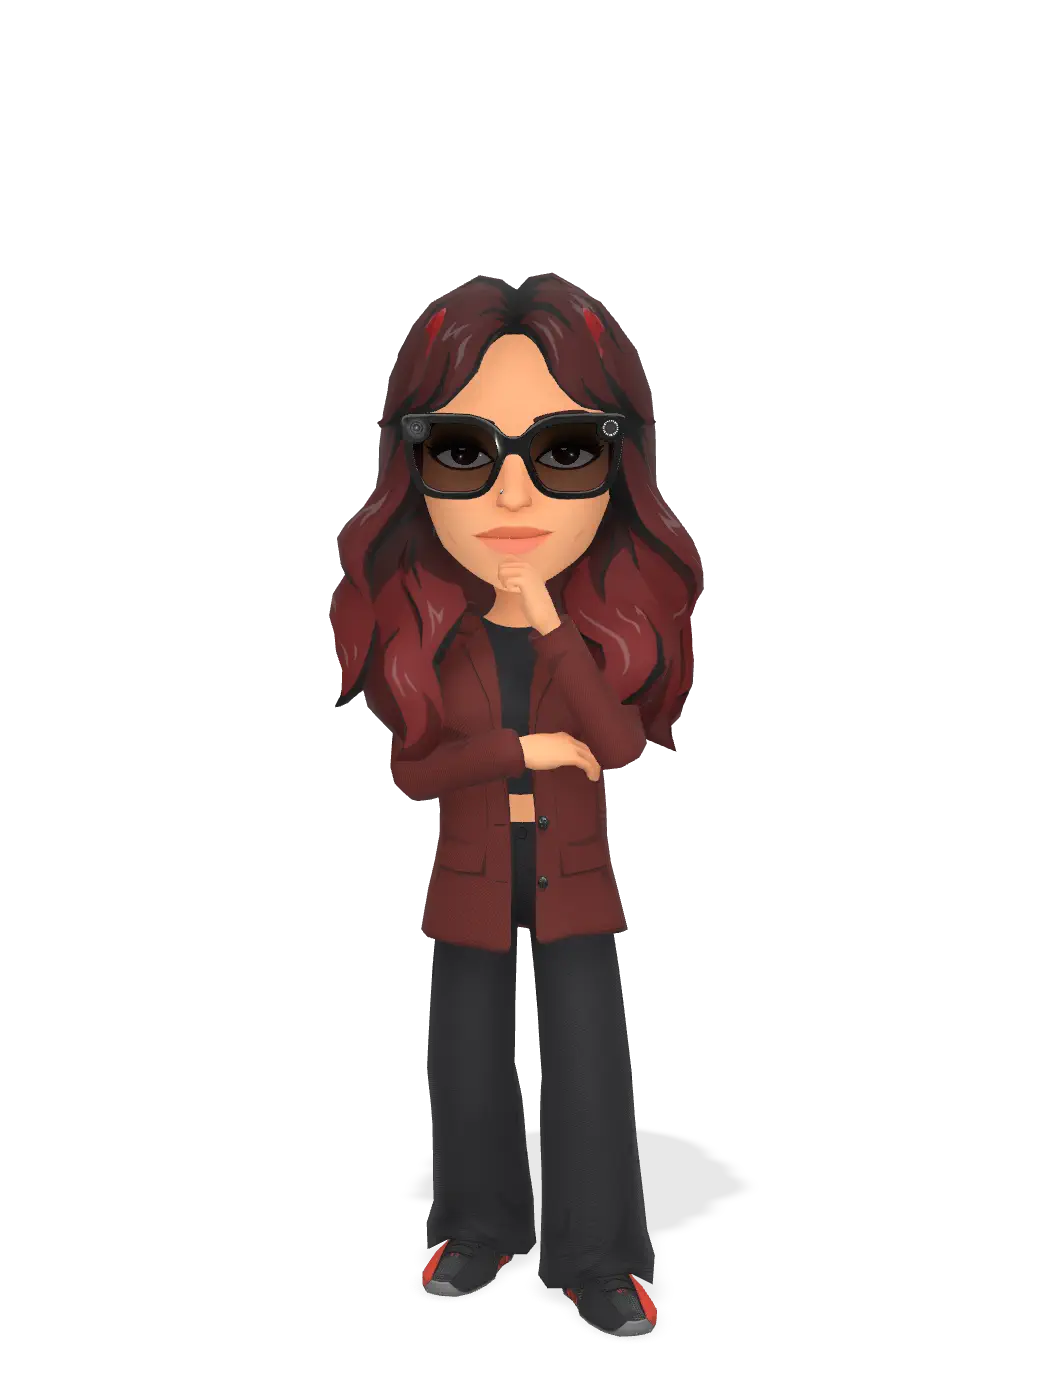 3D Bitmoji for emmadsg02 avatar